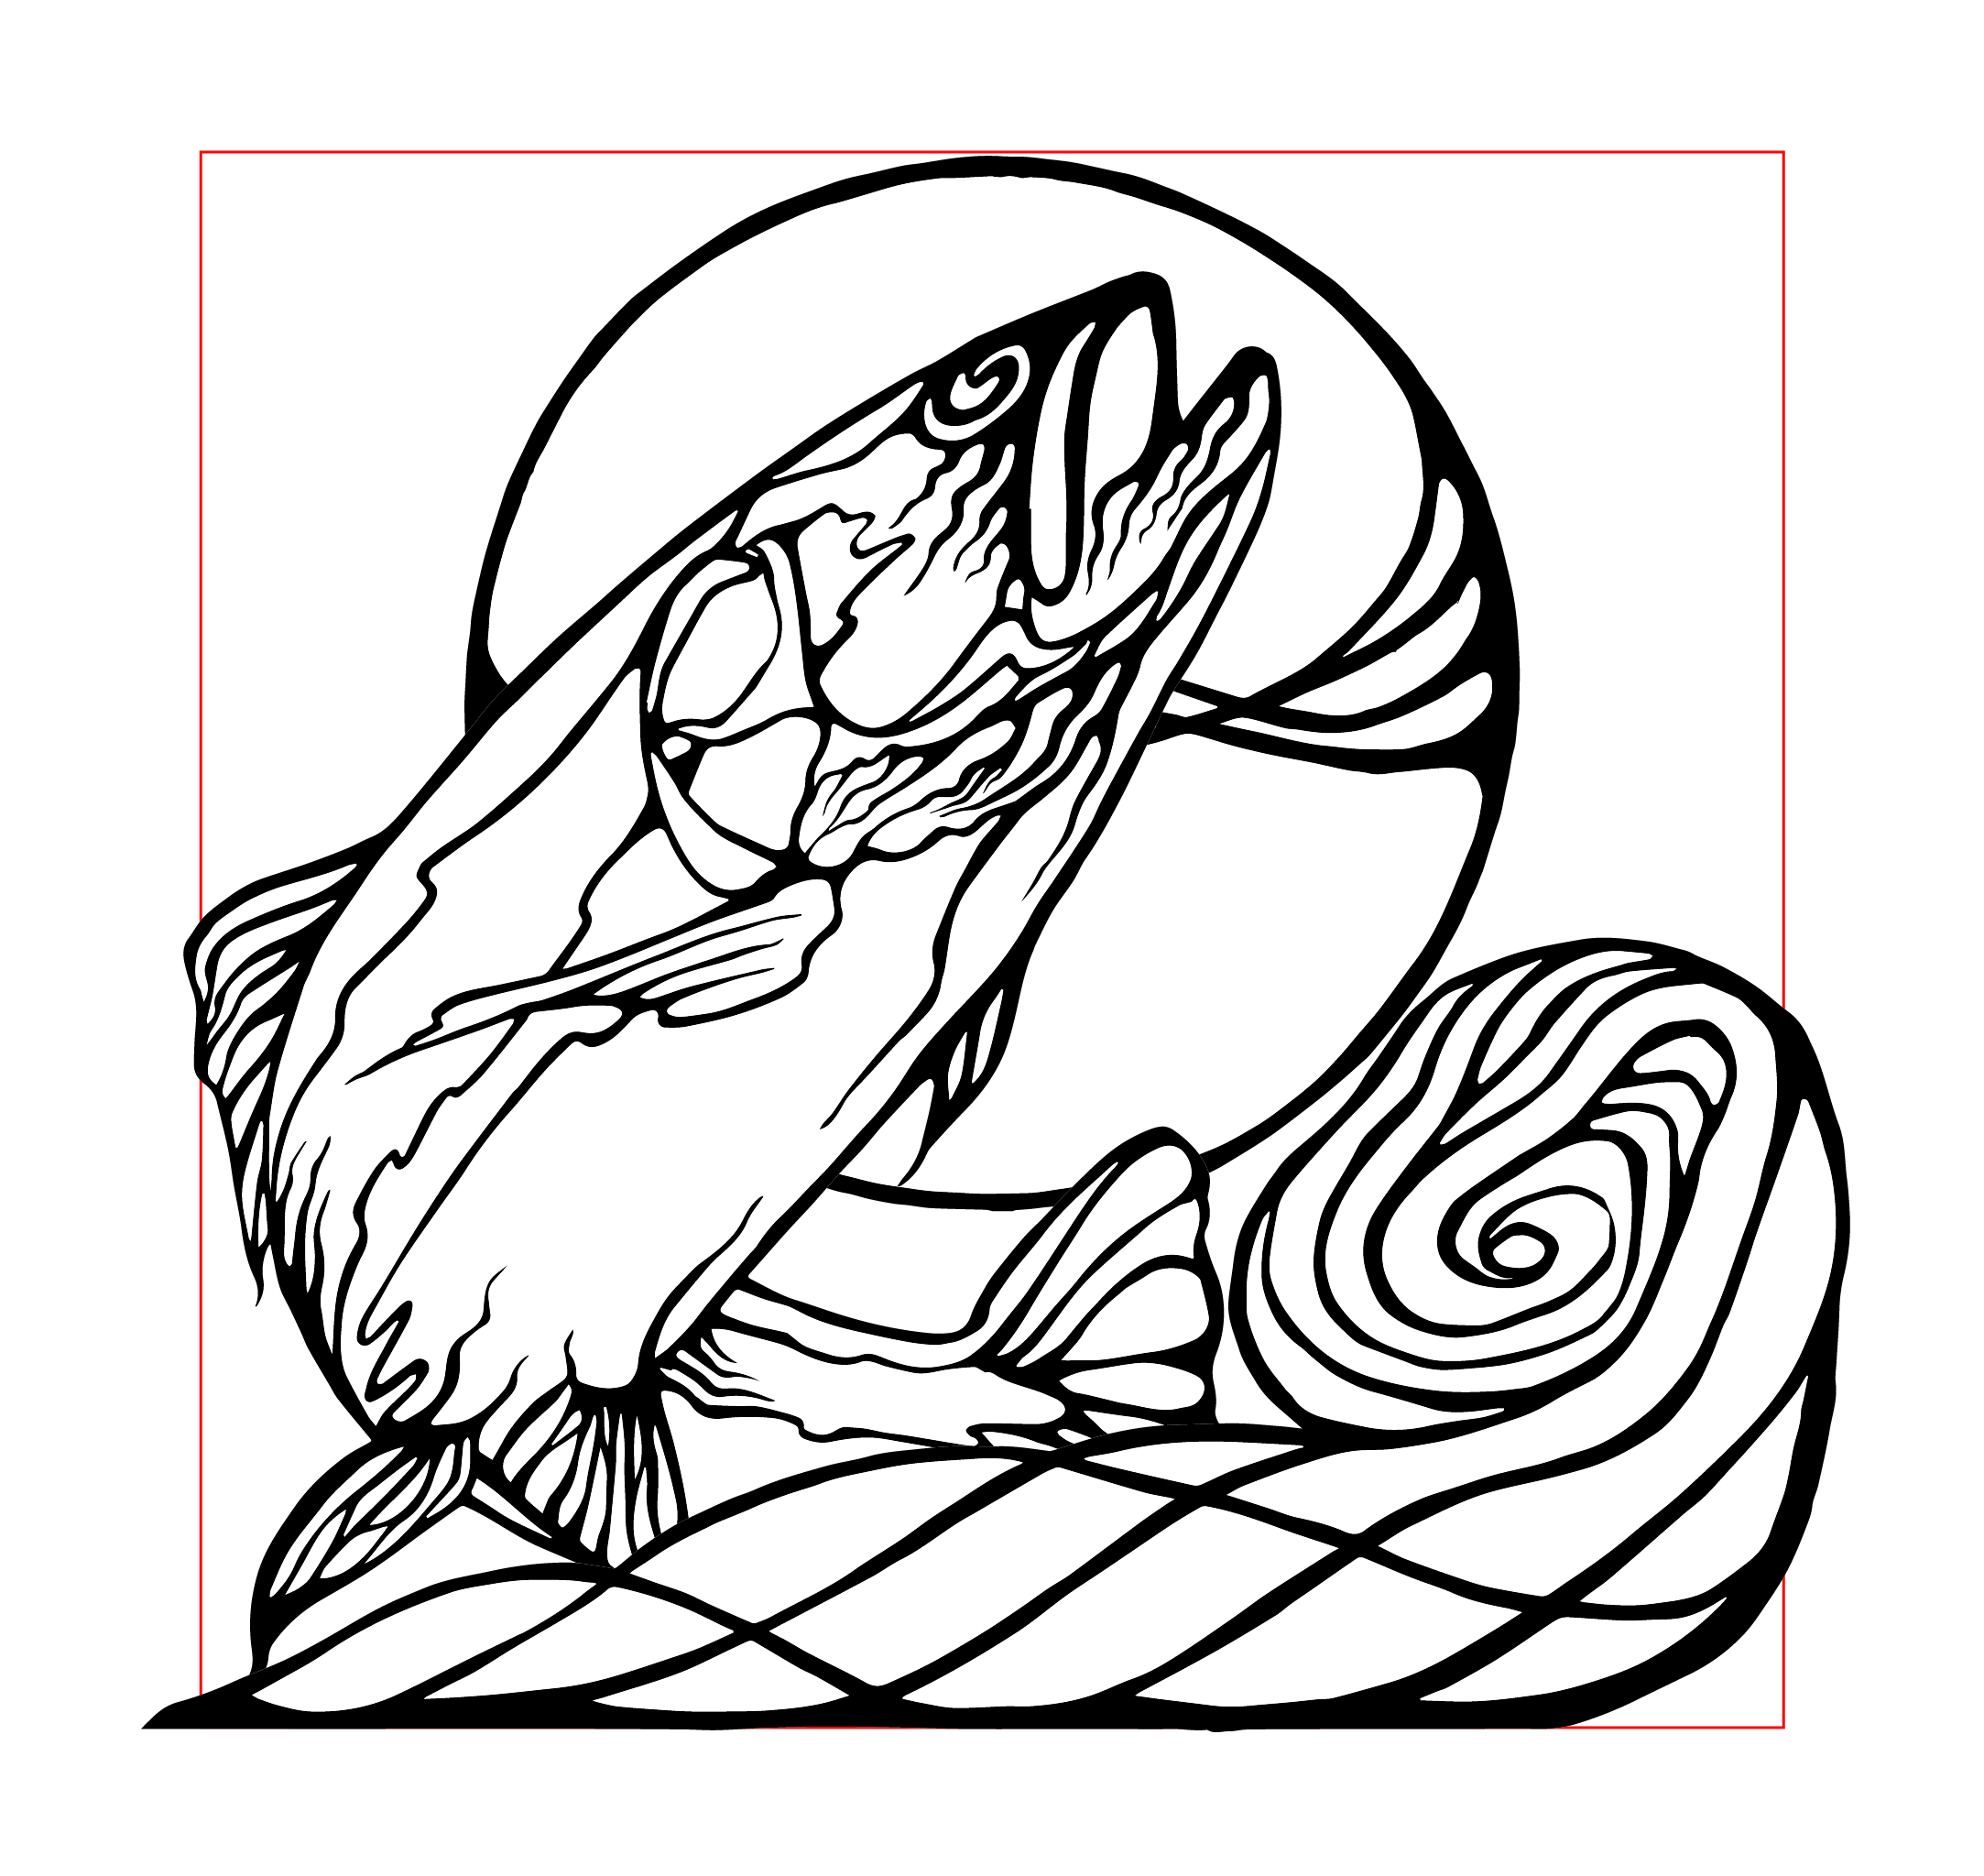 trout-illustration-2166×2048-1